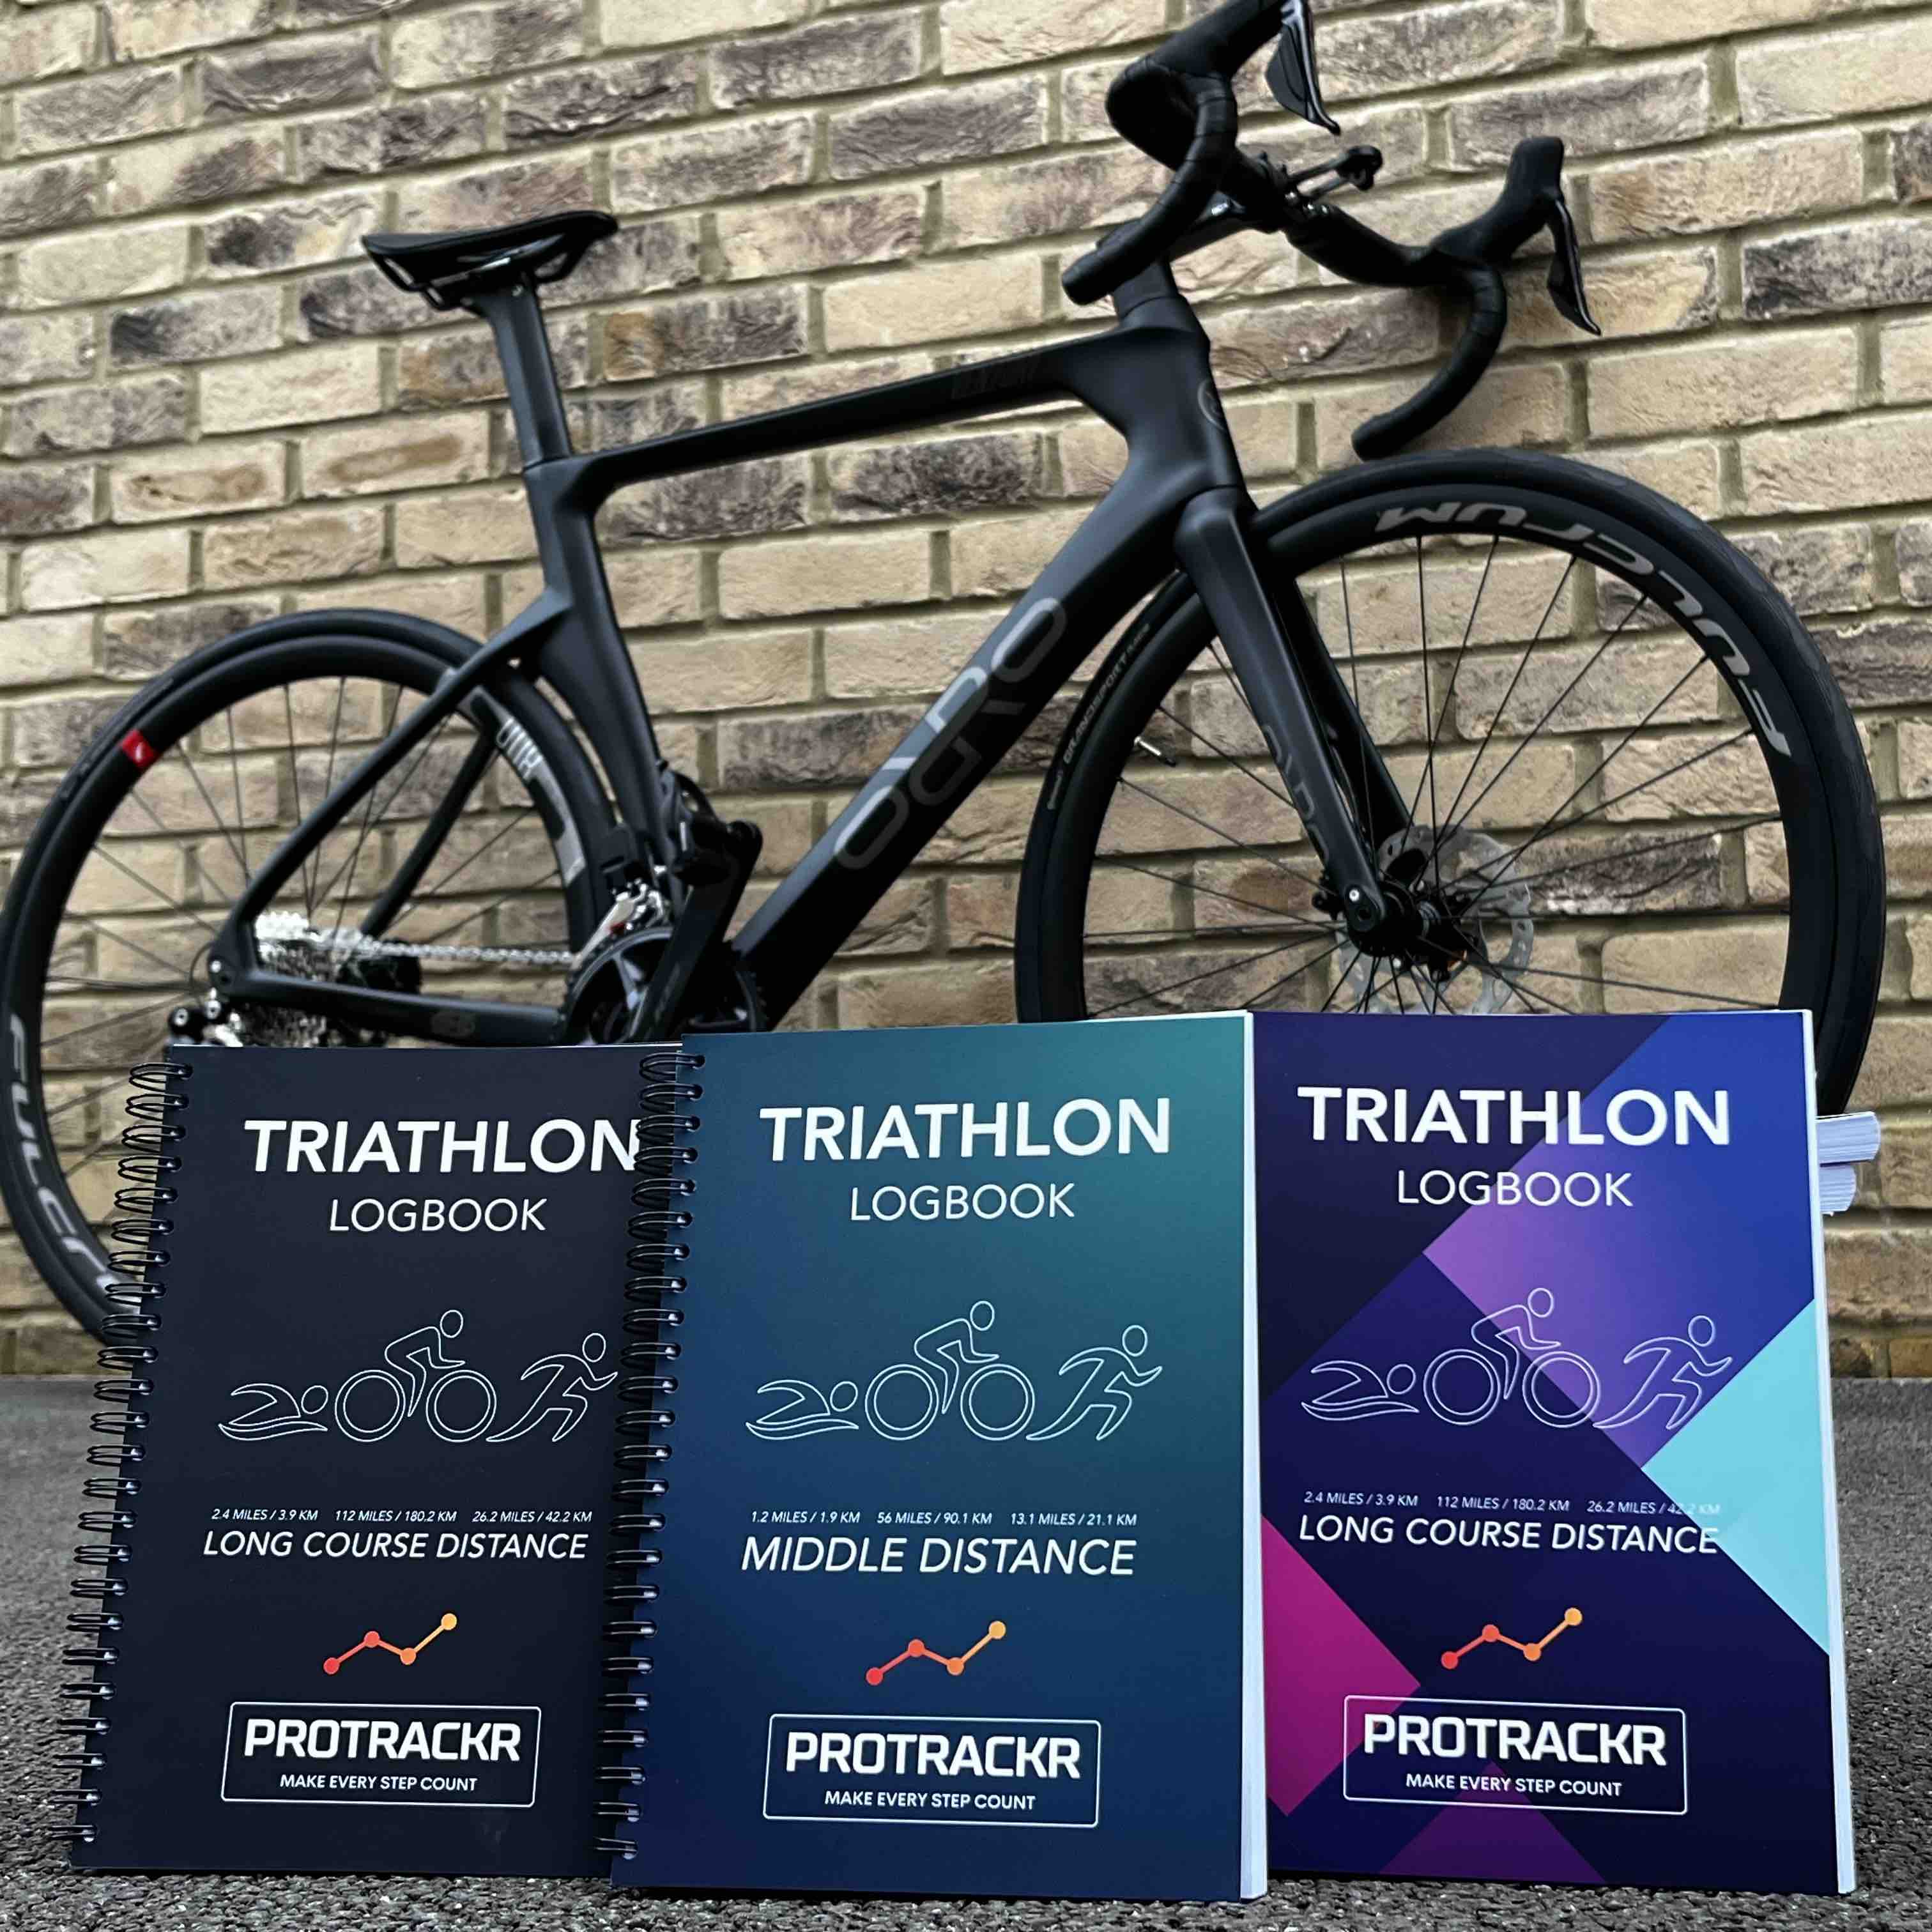 Triathlon Logbooks and Fast Bike